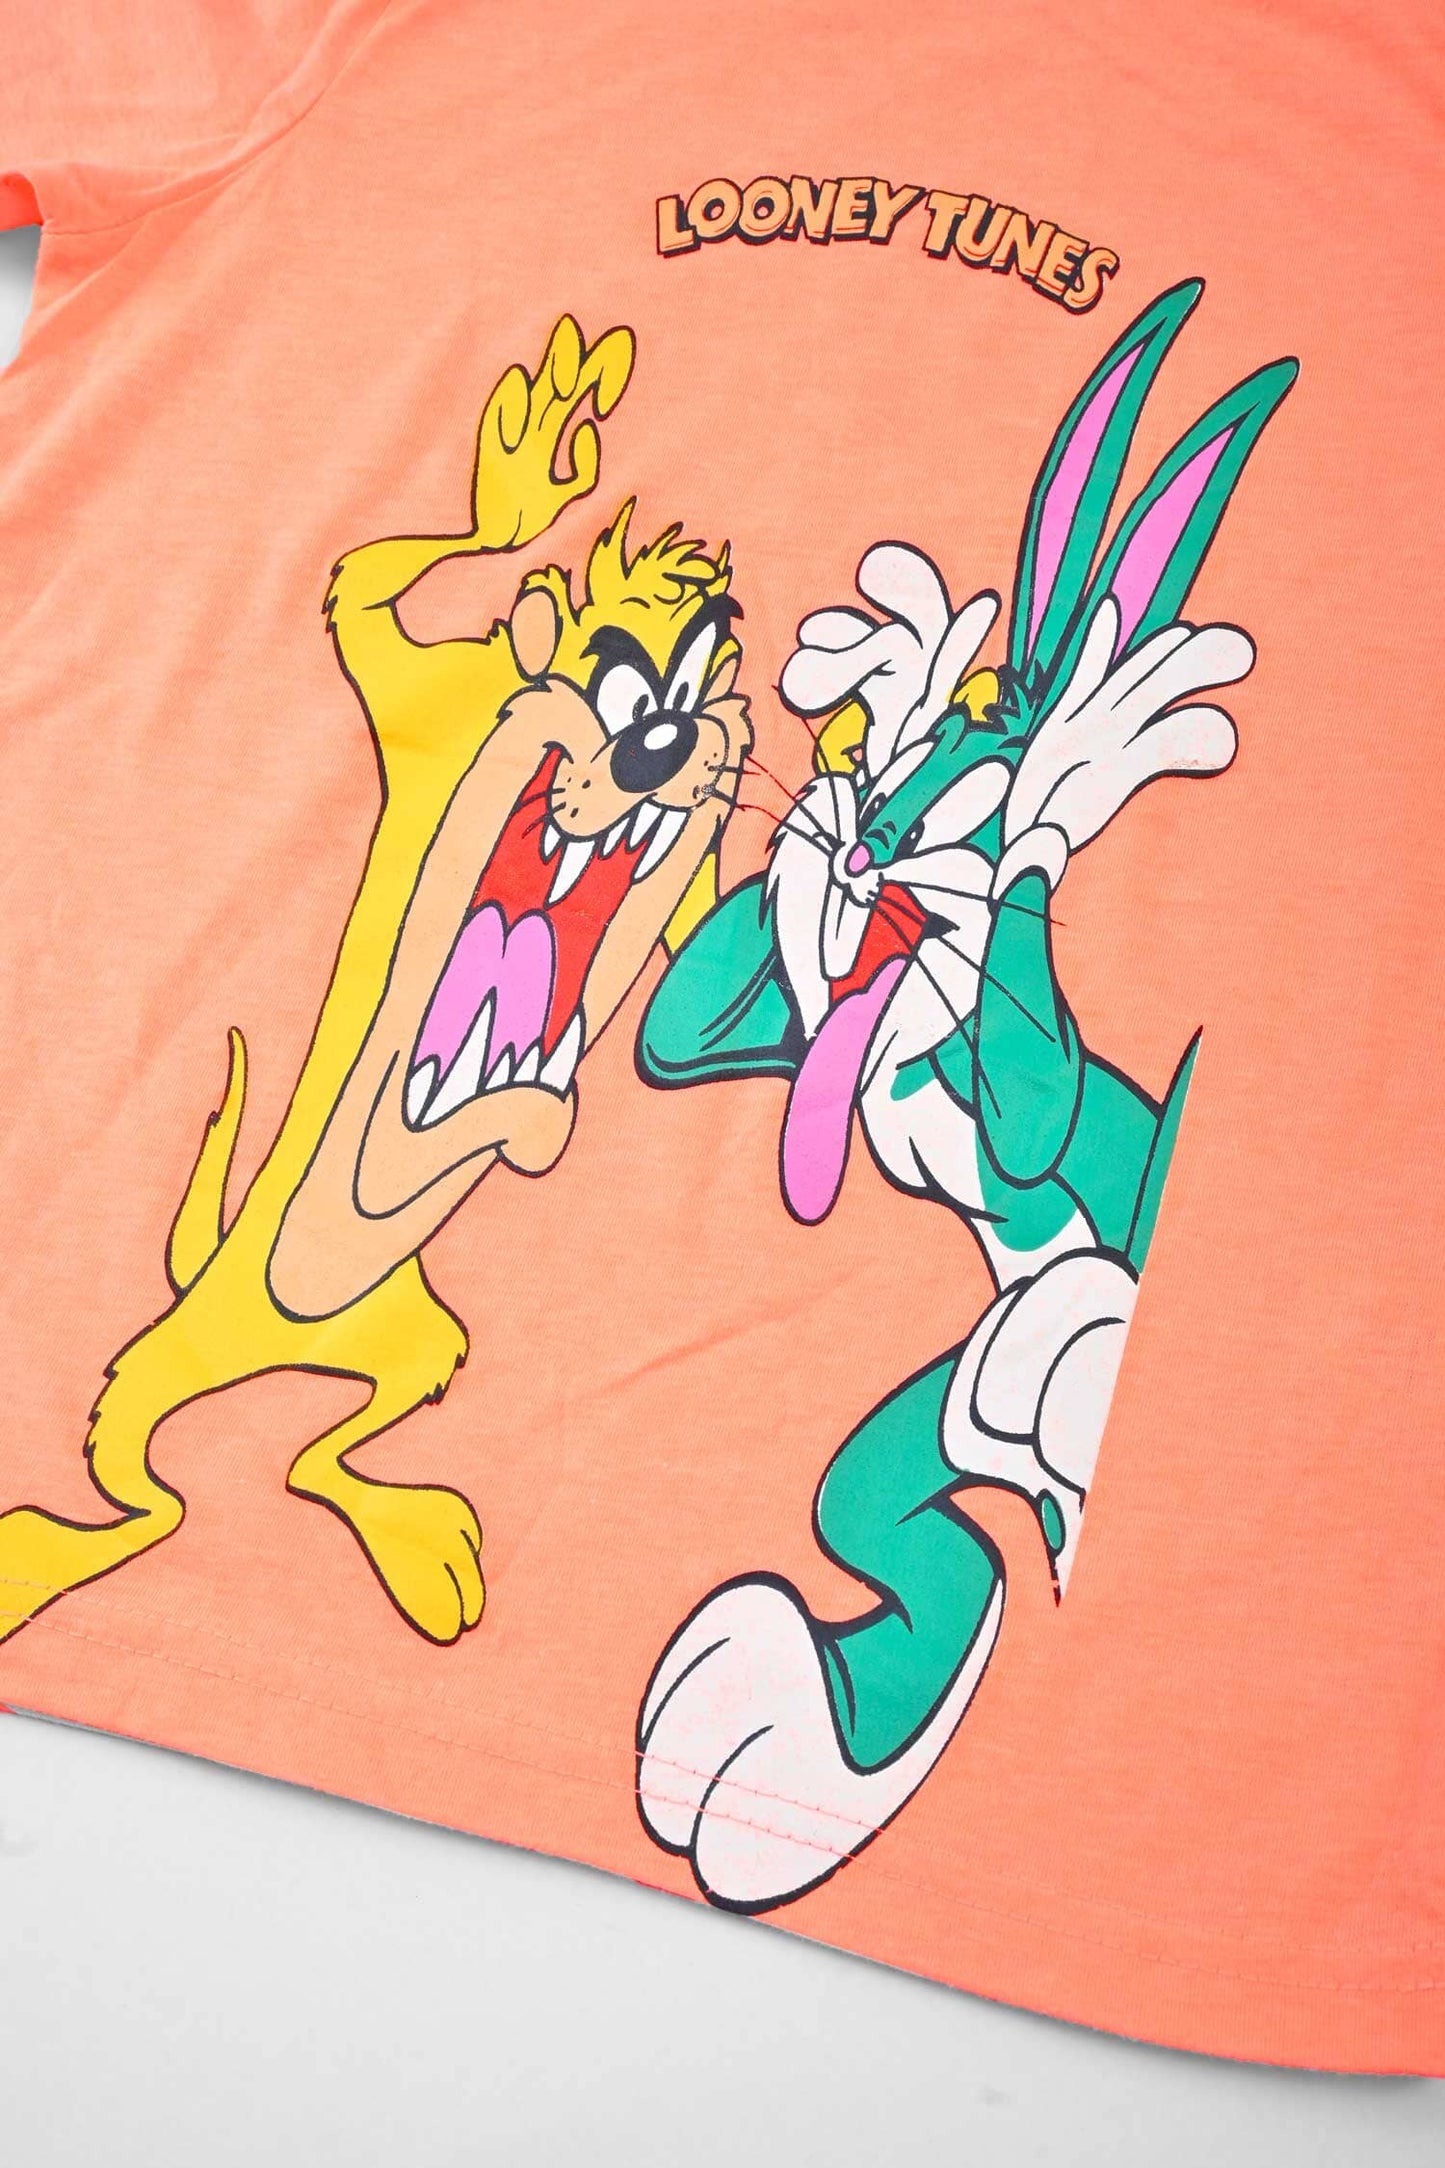 Minoti Kid's Looney Tunes Printed Tee Shirt